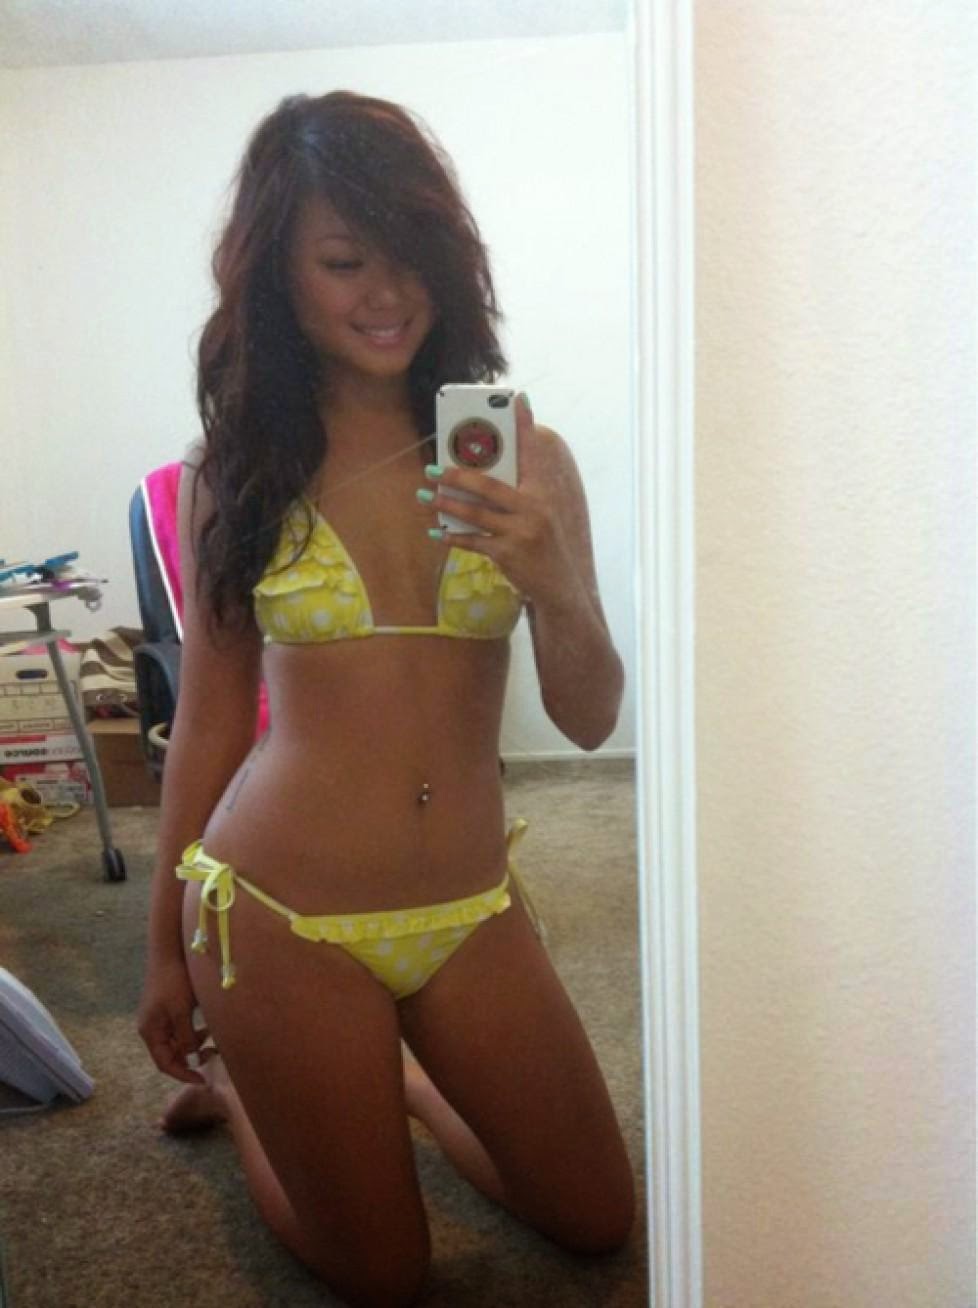 Beautiful Asian Pinay Teen Girlfriend Stripping Naked